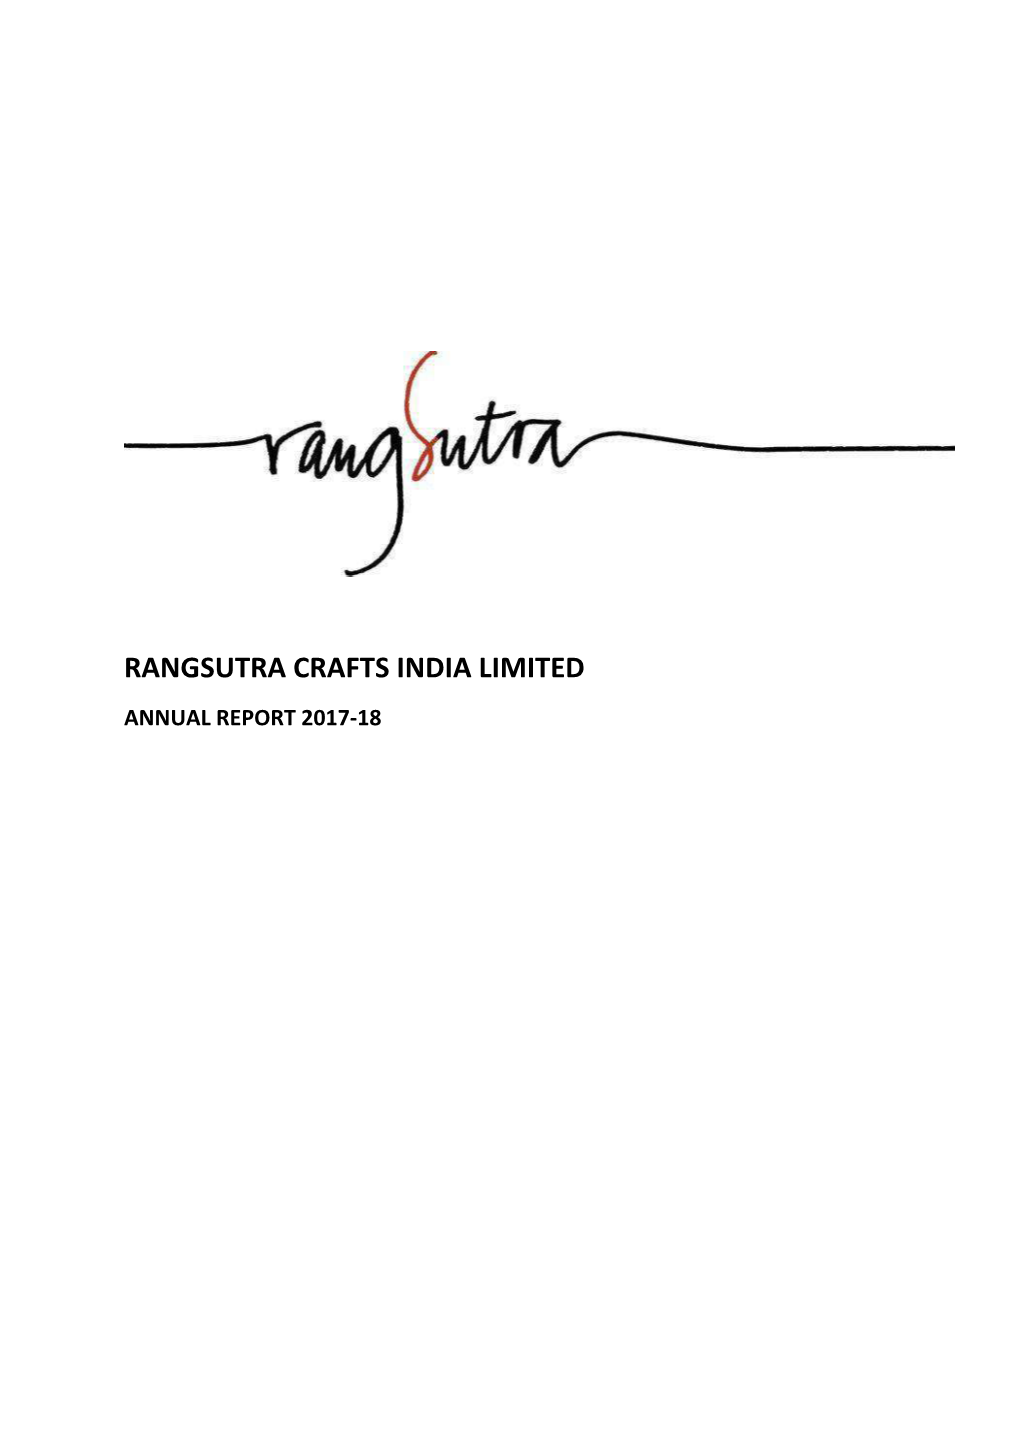 Rangsutra-Crafts-India-Ltd Annual-Report-2017-18.Pdf